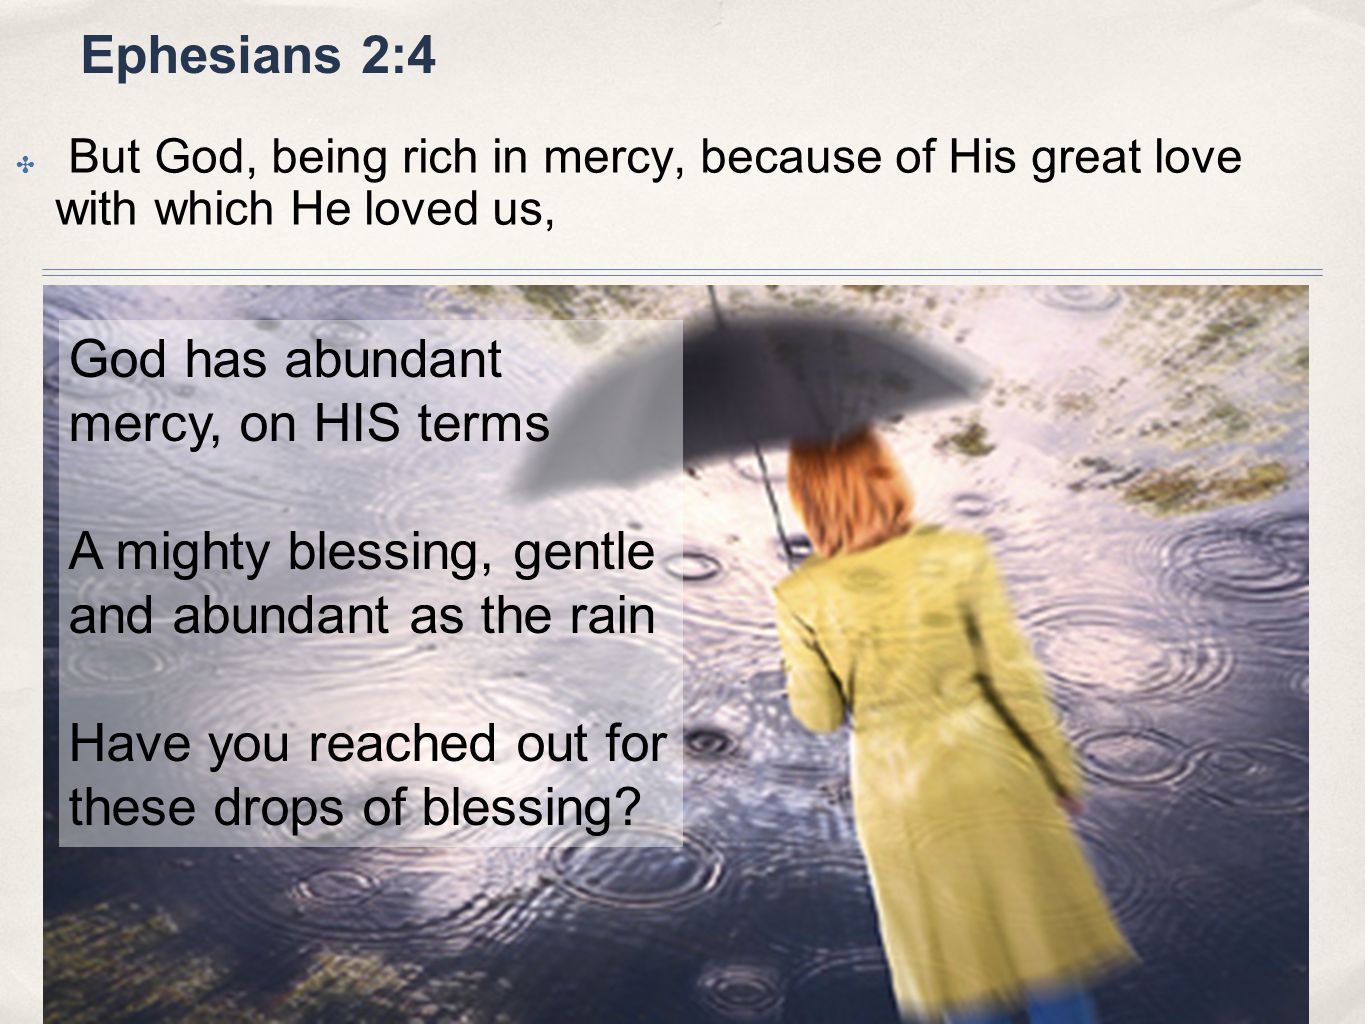 God has abundant mercy, on HIS terms